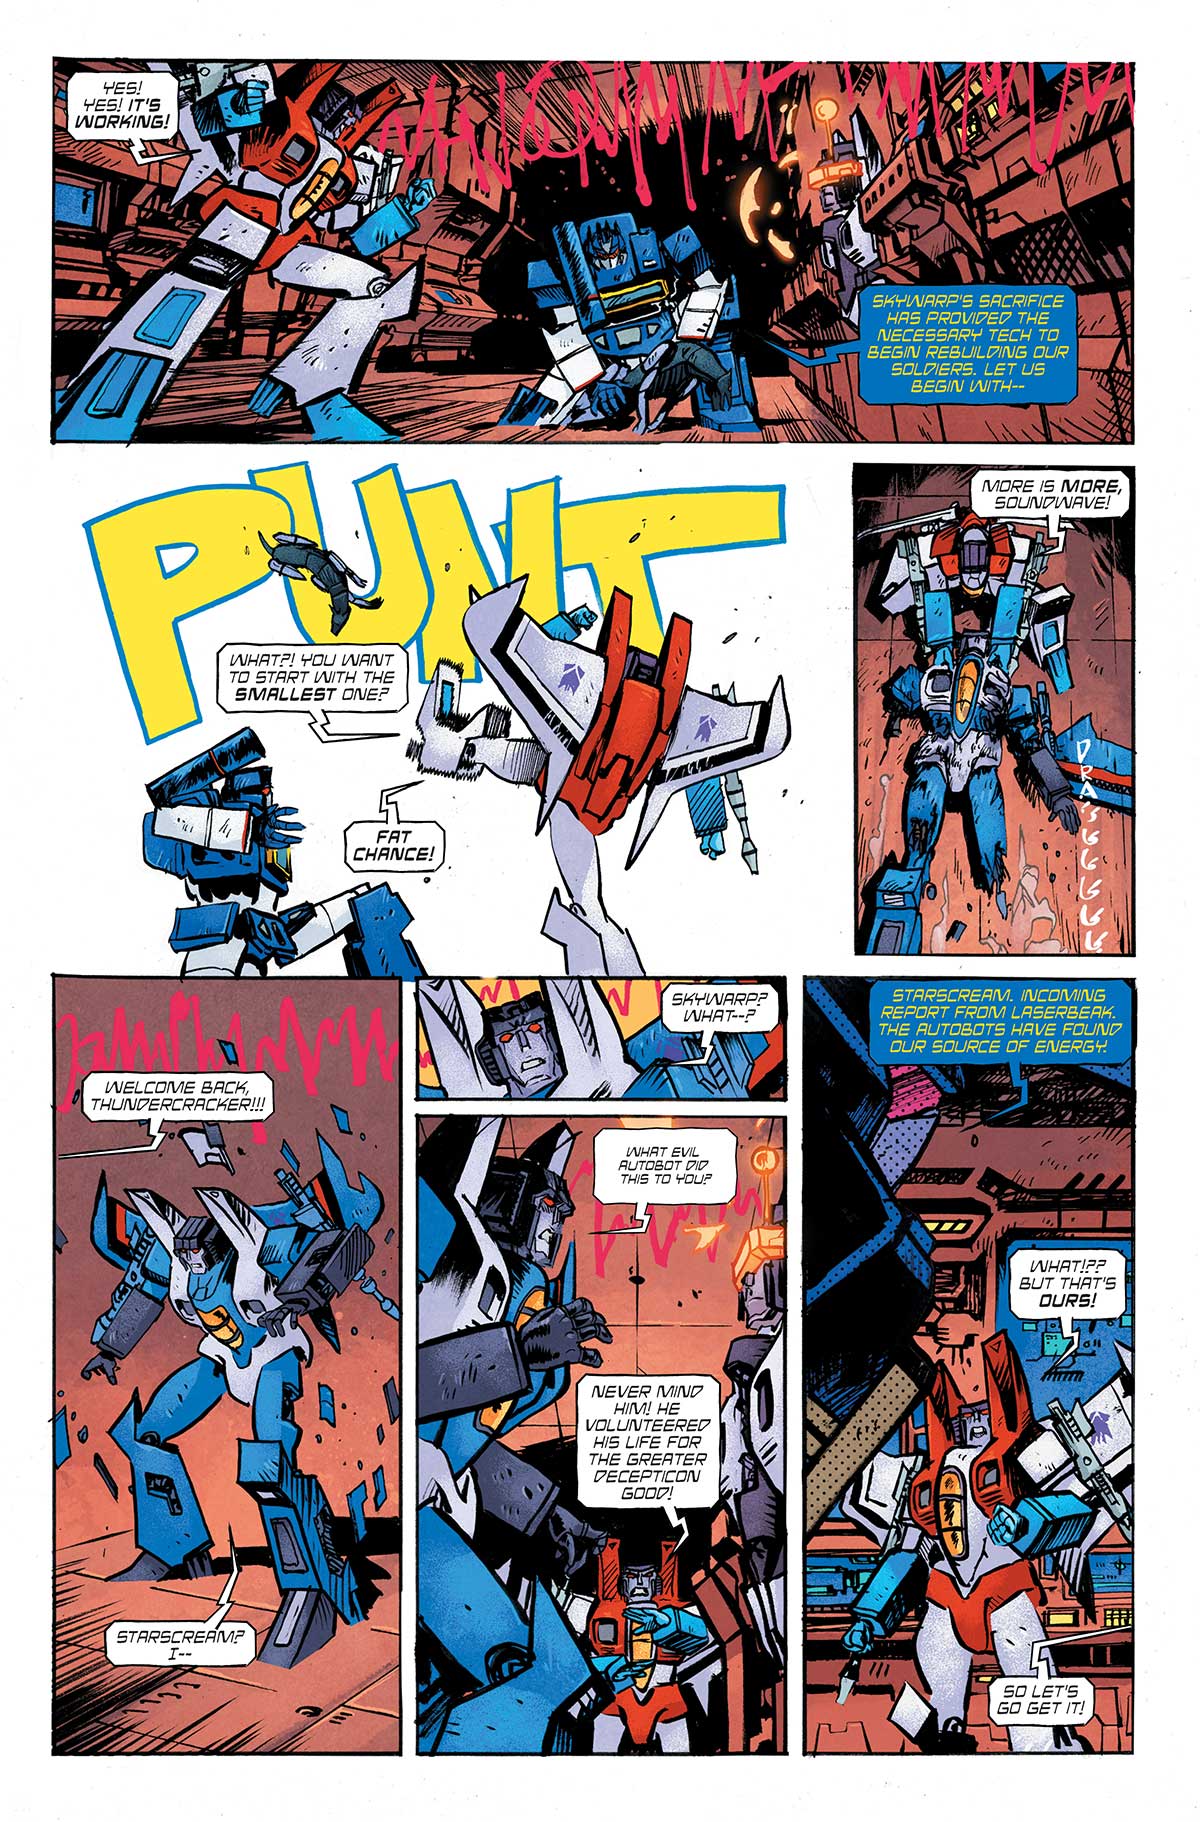 Pagine da Transformers #5